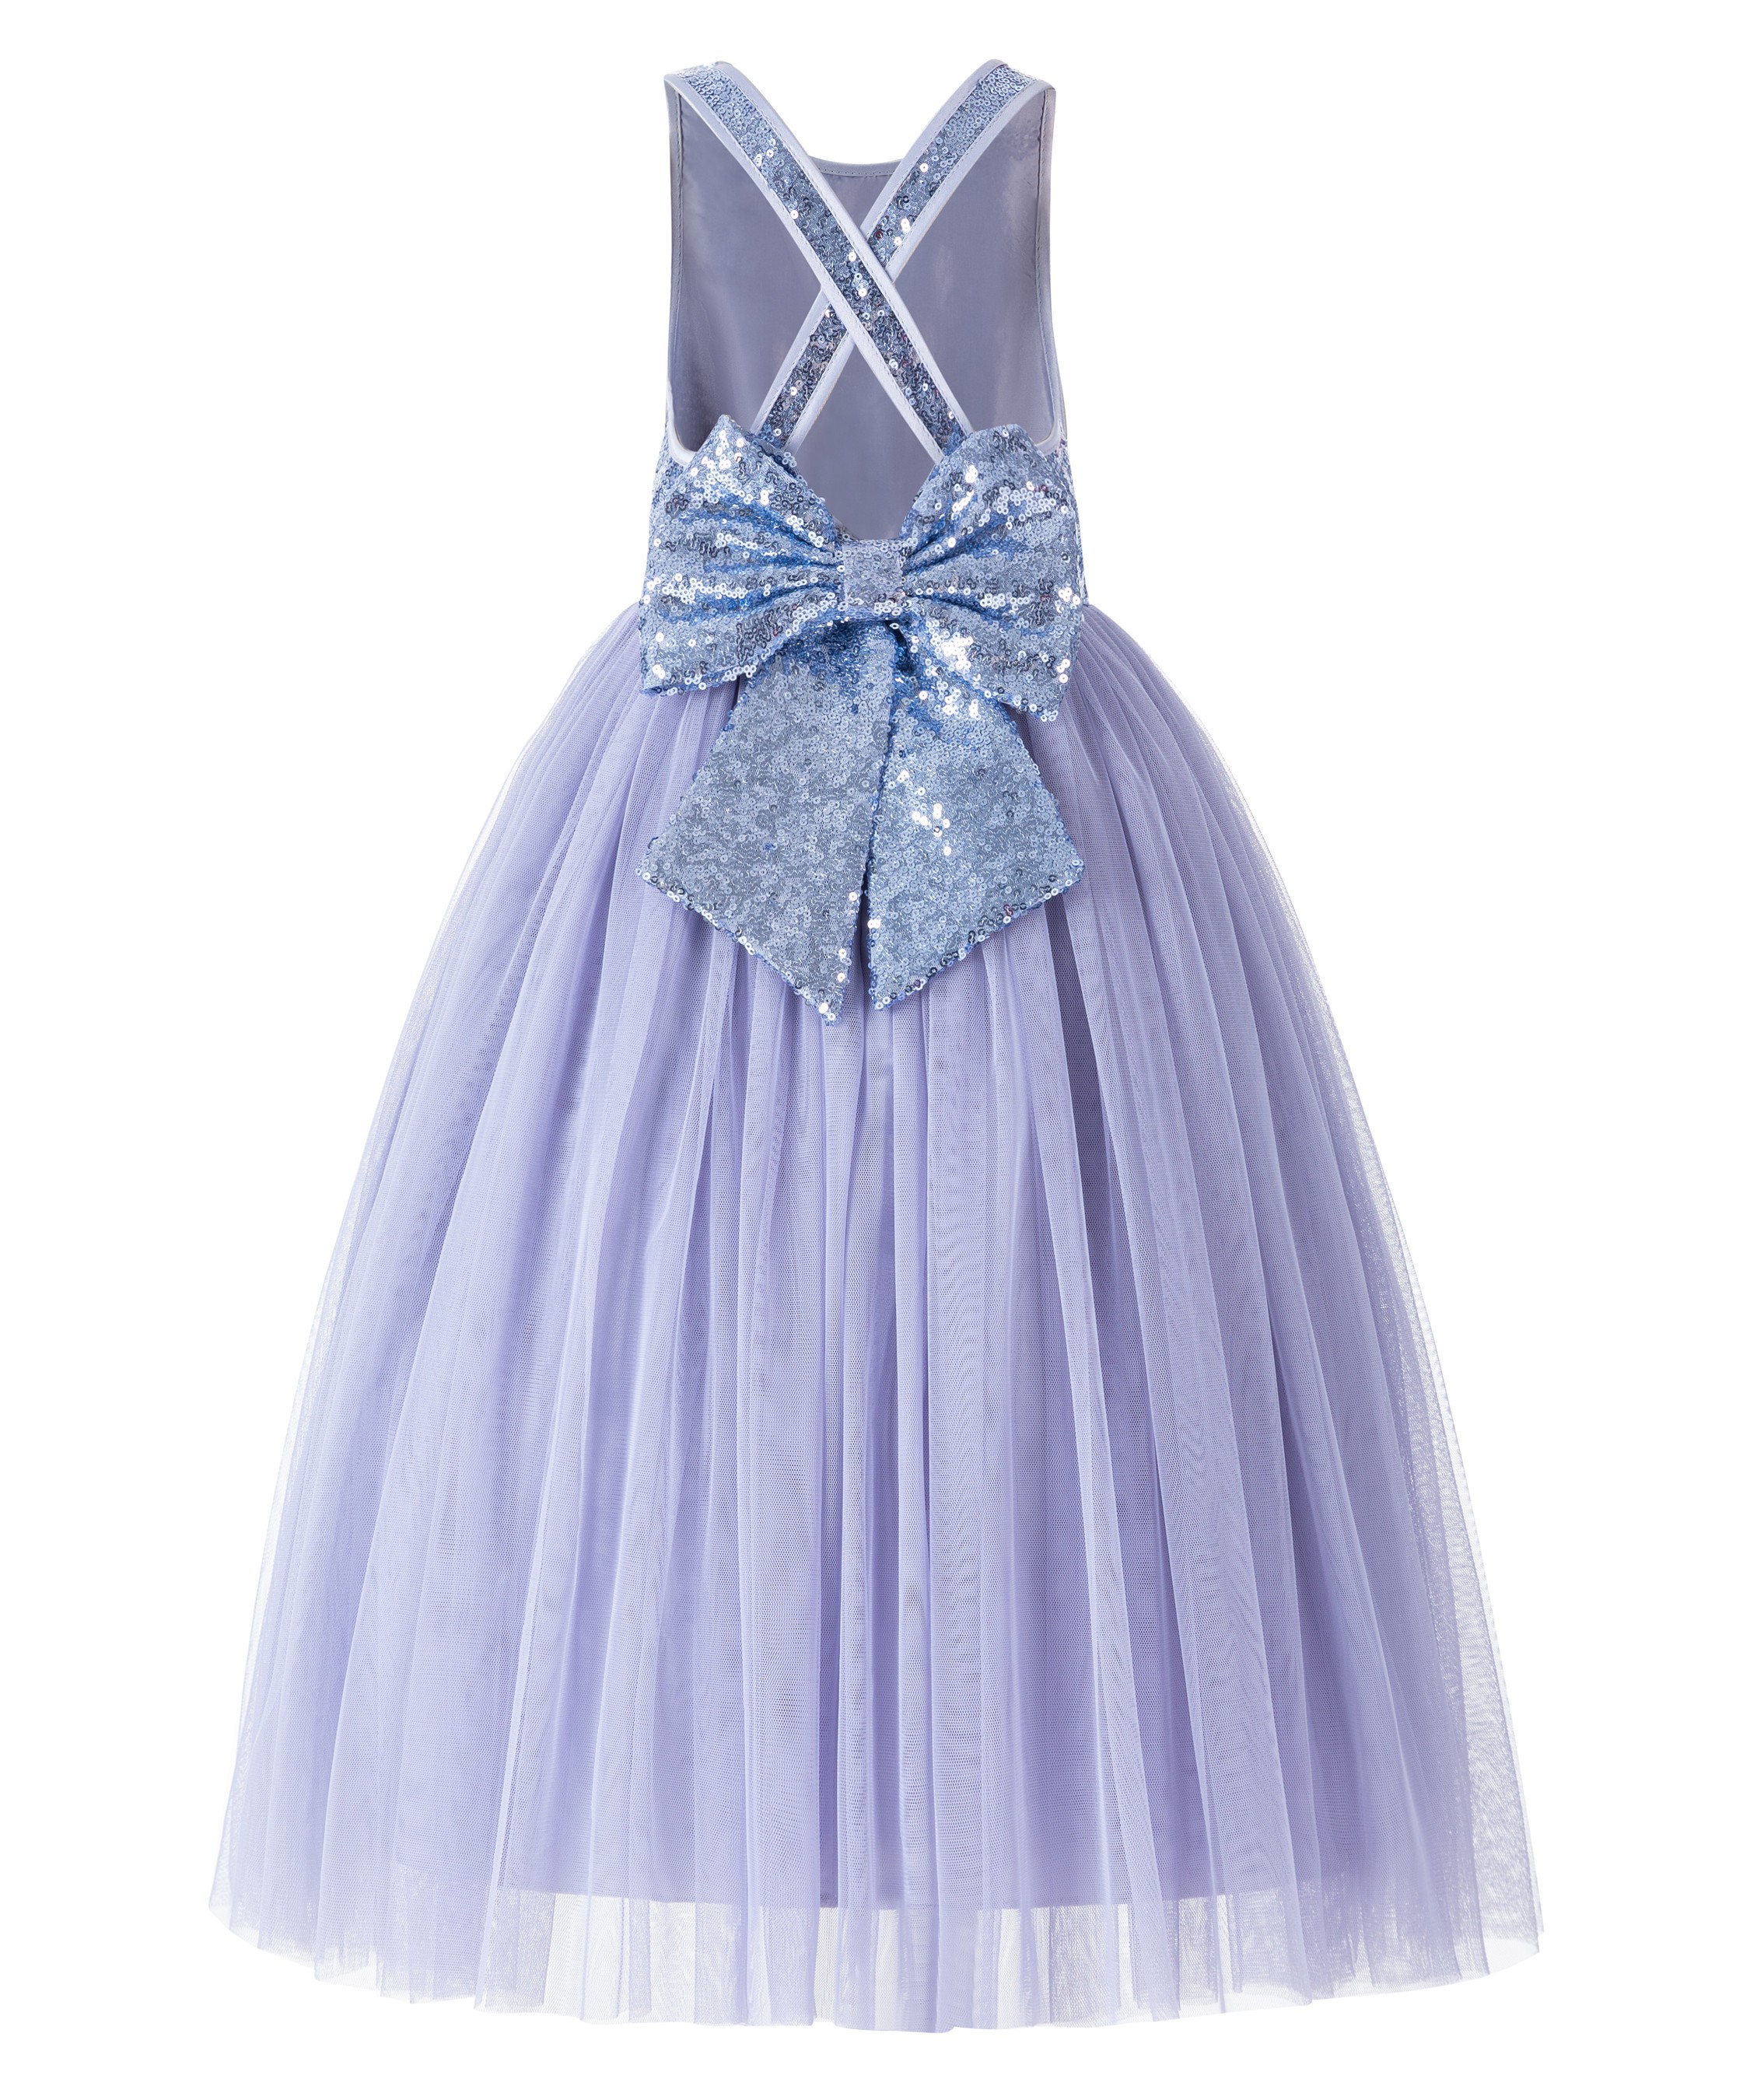 Dusty Lavender Crossed Straps A-Line Flower Girl Dress 177